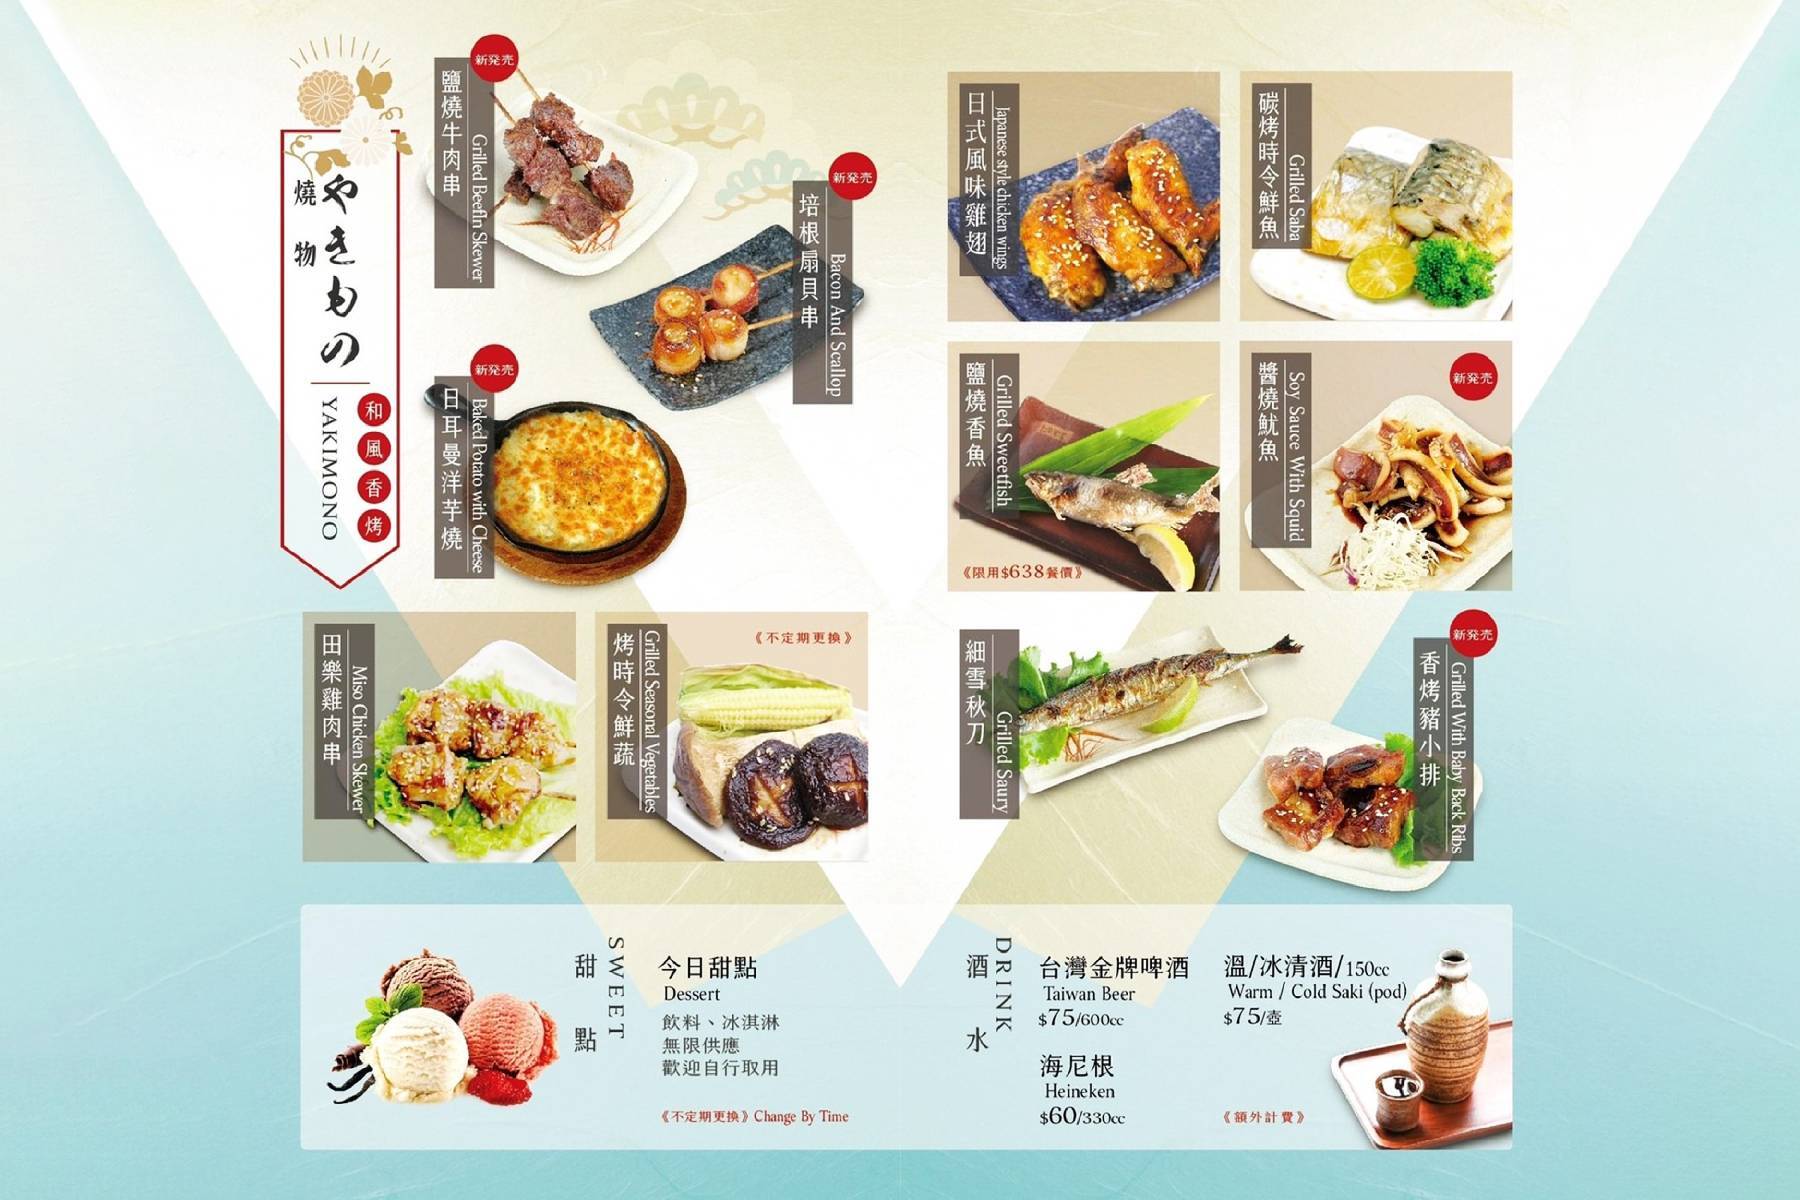 ●Soto日式精緻料理-平日午餐A餐吃到飽9